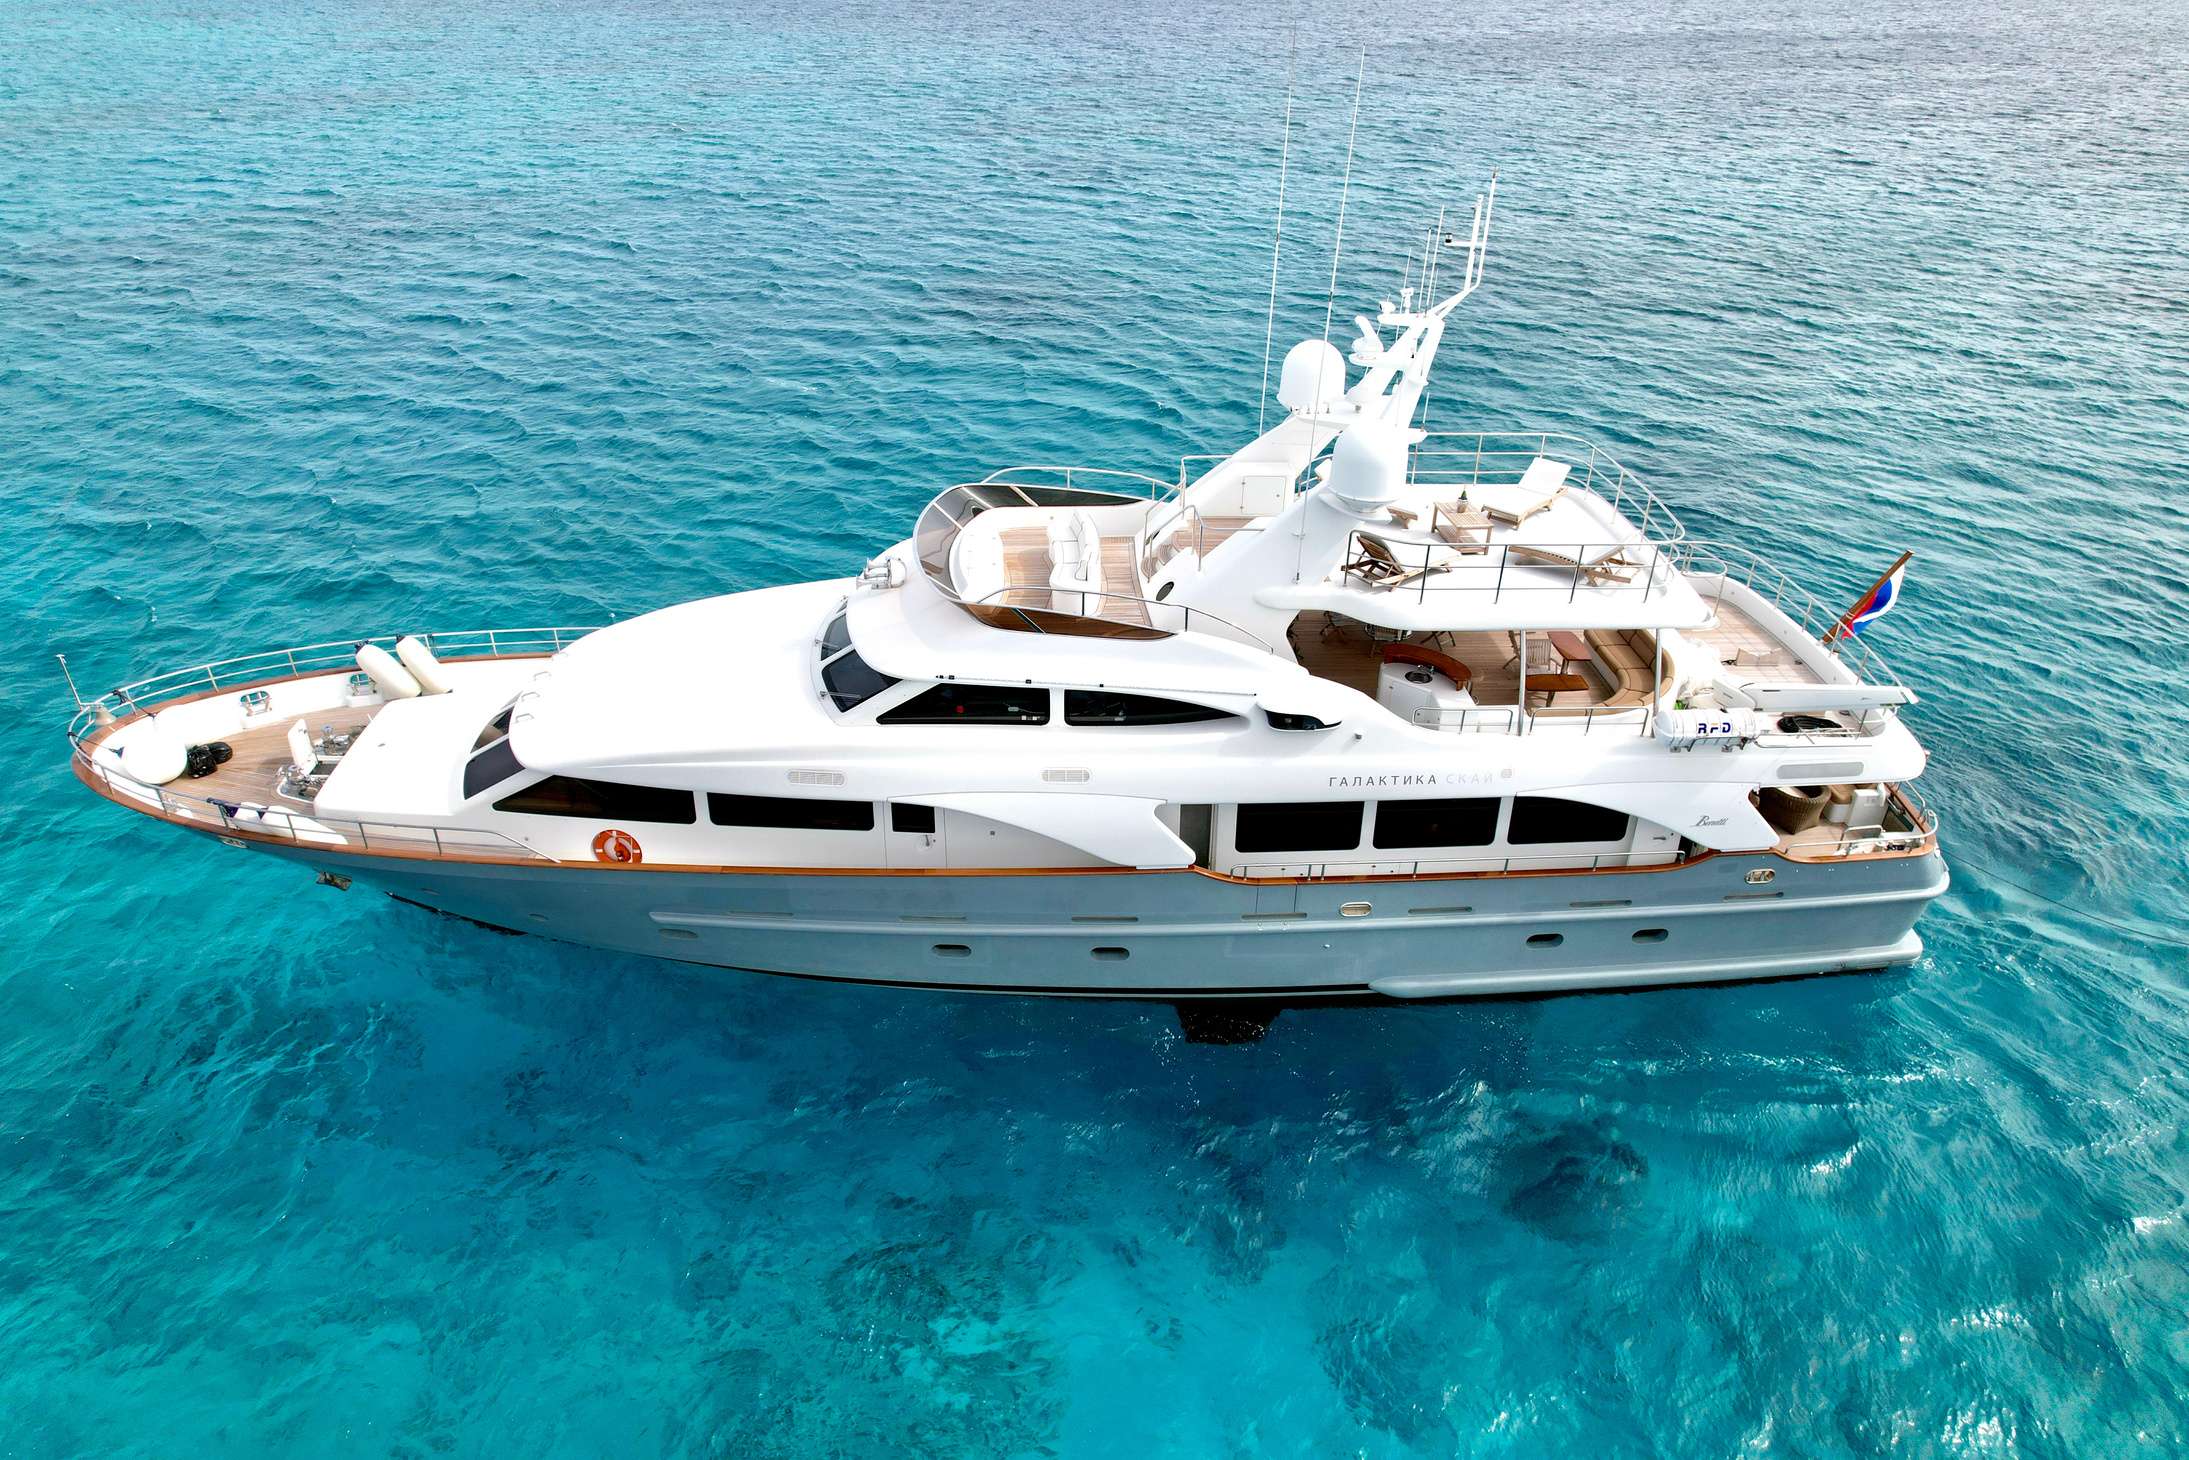 Galaktika Skay - Motor Boat Charter Seychelles & Boat hire in Indian Ocean & SE Asia 1